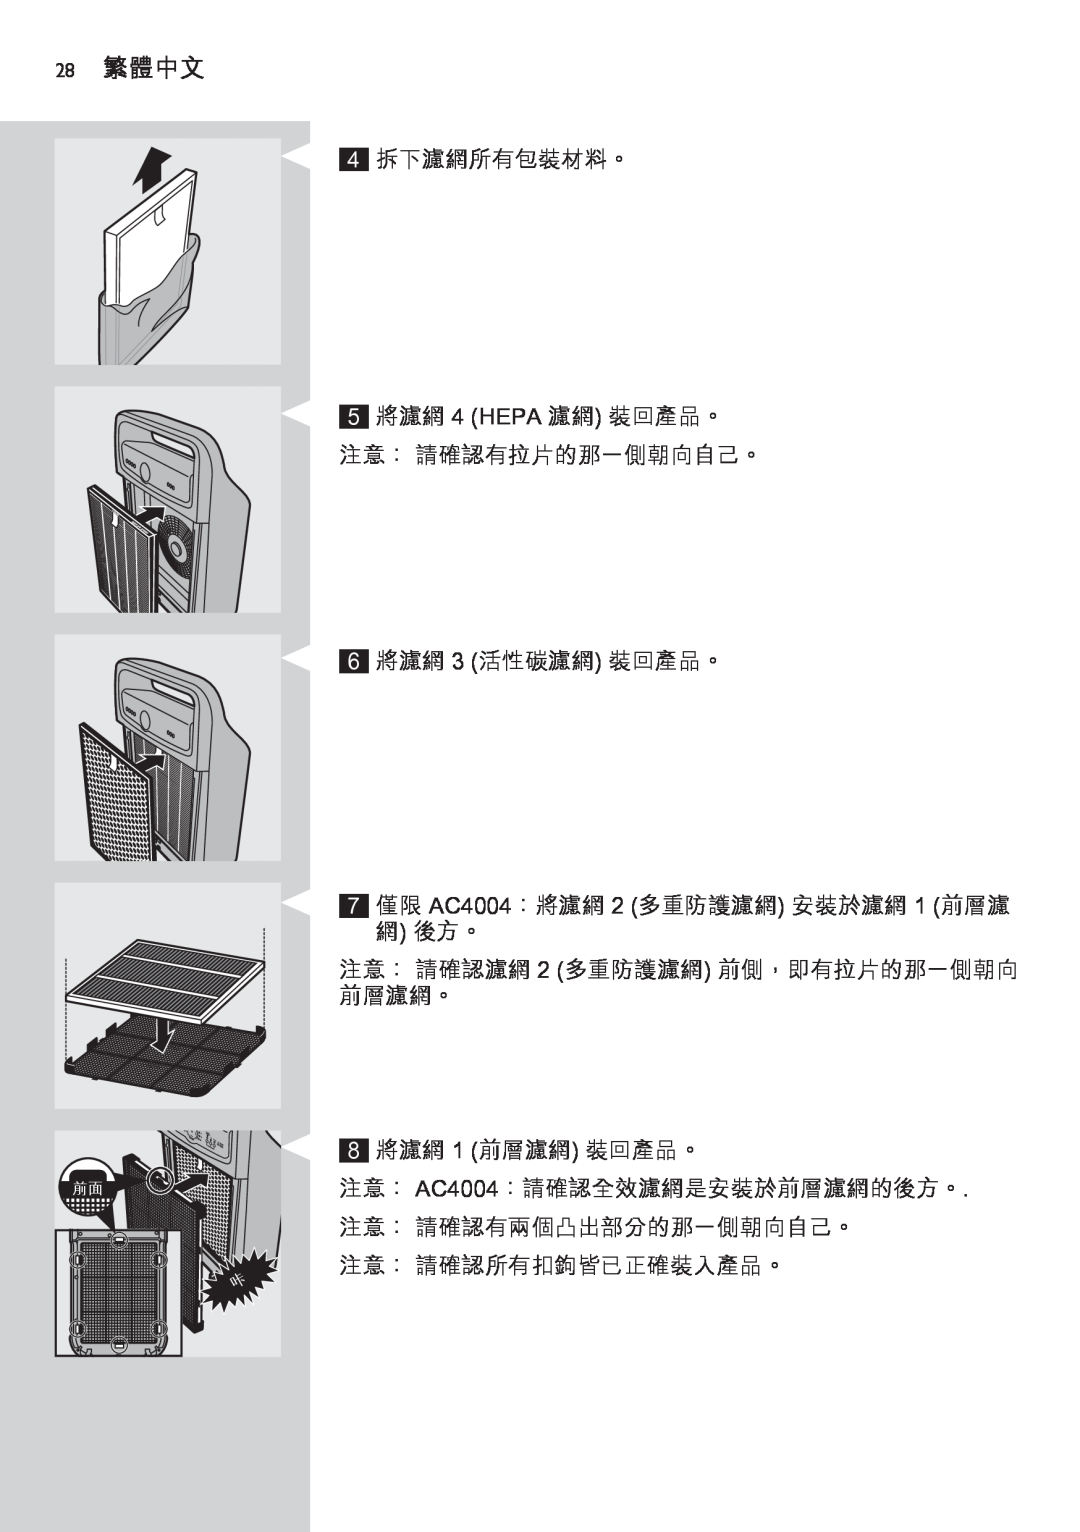 Philips AC4002 manual 28 繁體中文, 4 拆下濾網所有包裝材料。 5 將濾網 4 HEPA 濾網 裝回產品。 注意： 請確認有拉片的那一側朝向自己。, 注意： 請確認所有扣鉤皆已正確裝入產品。  